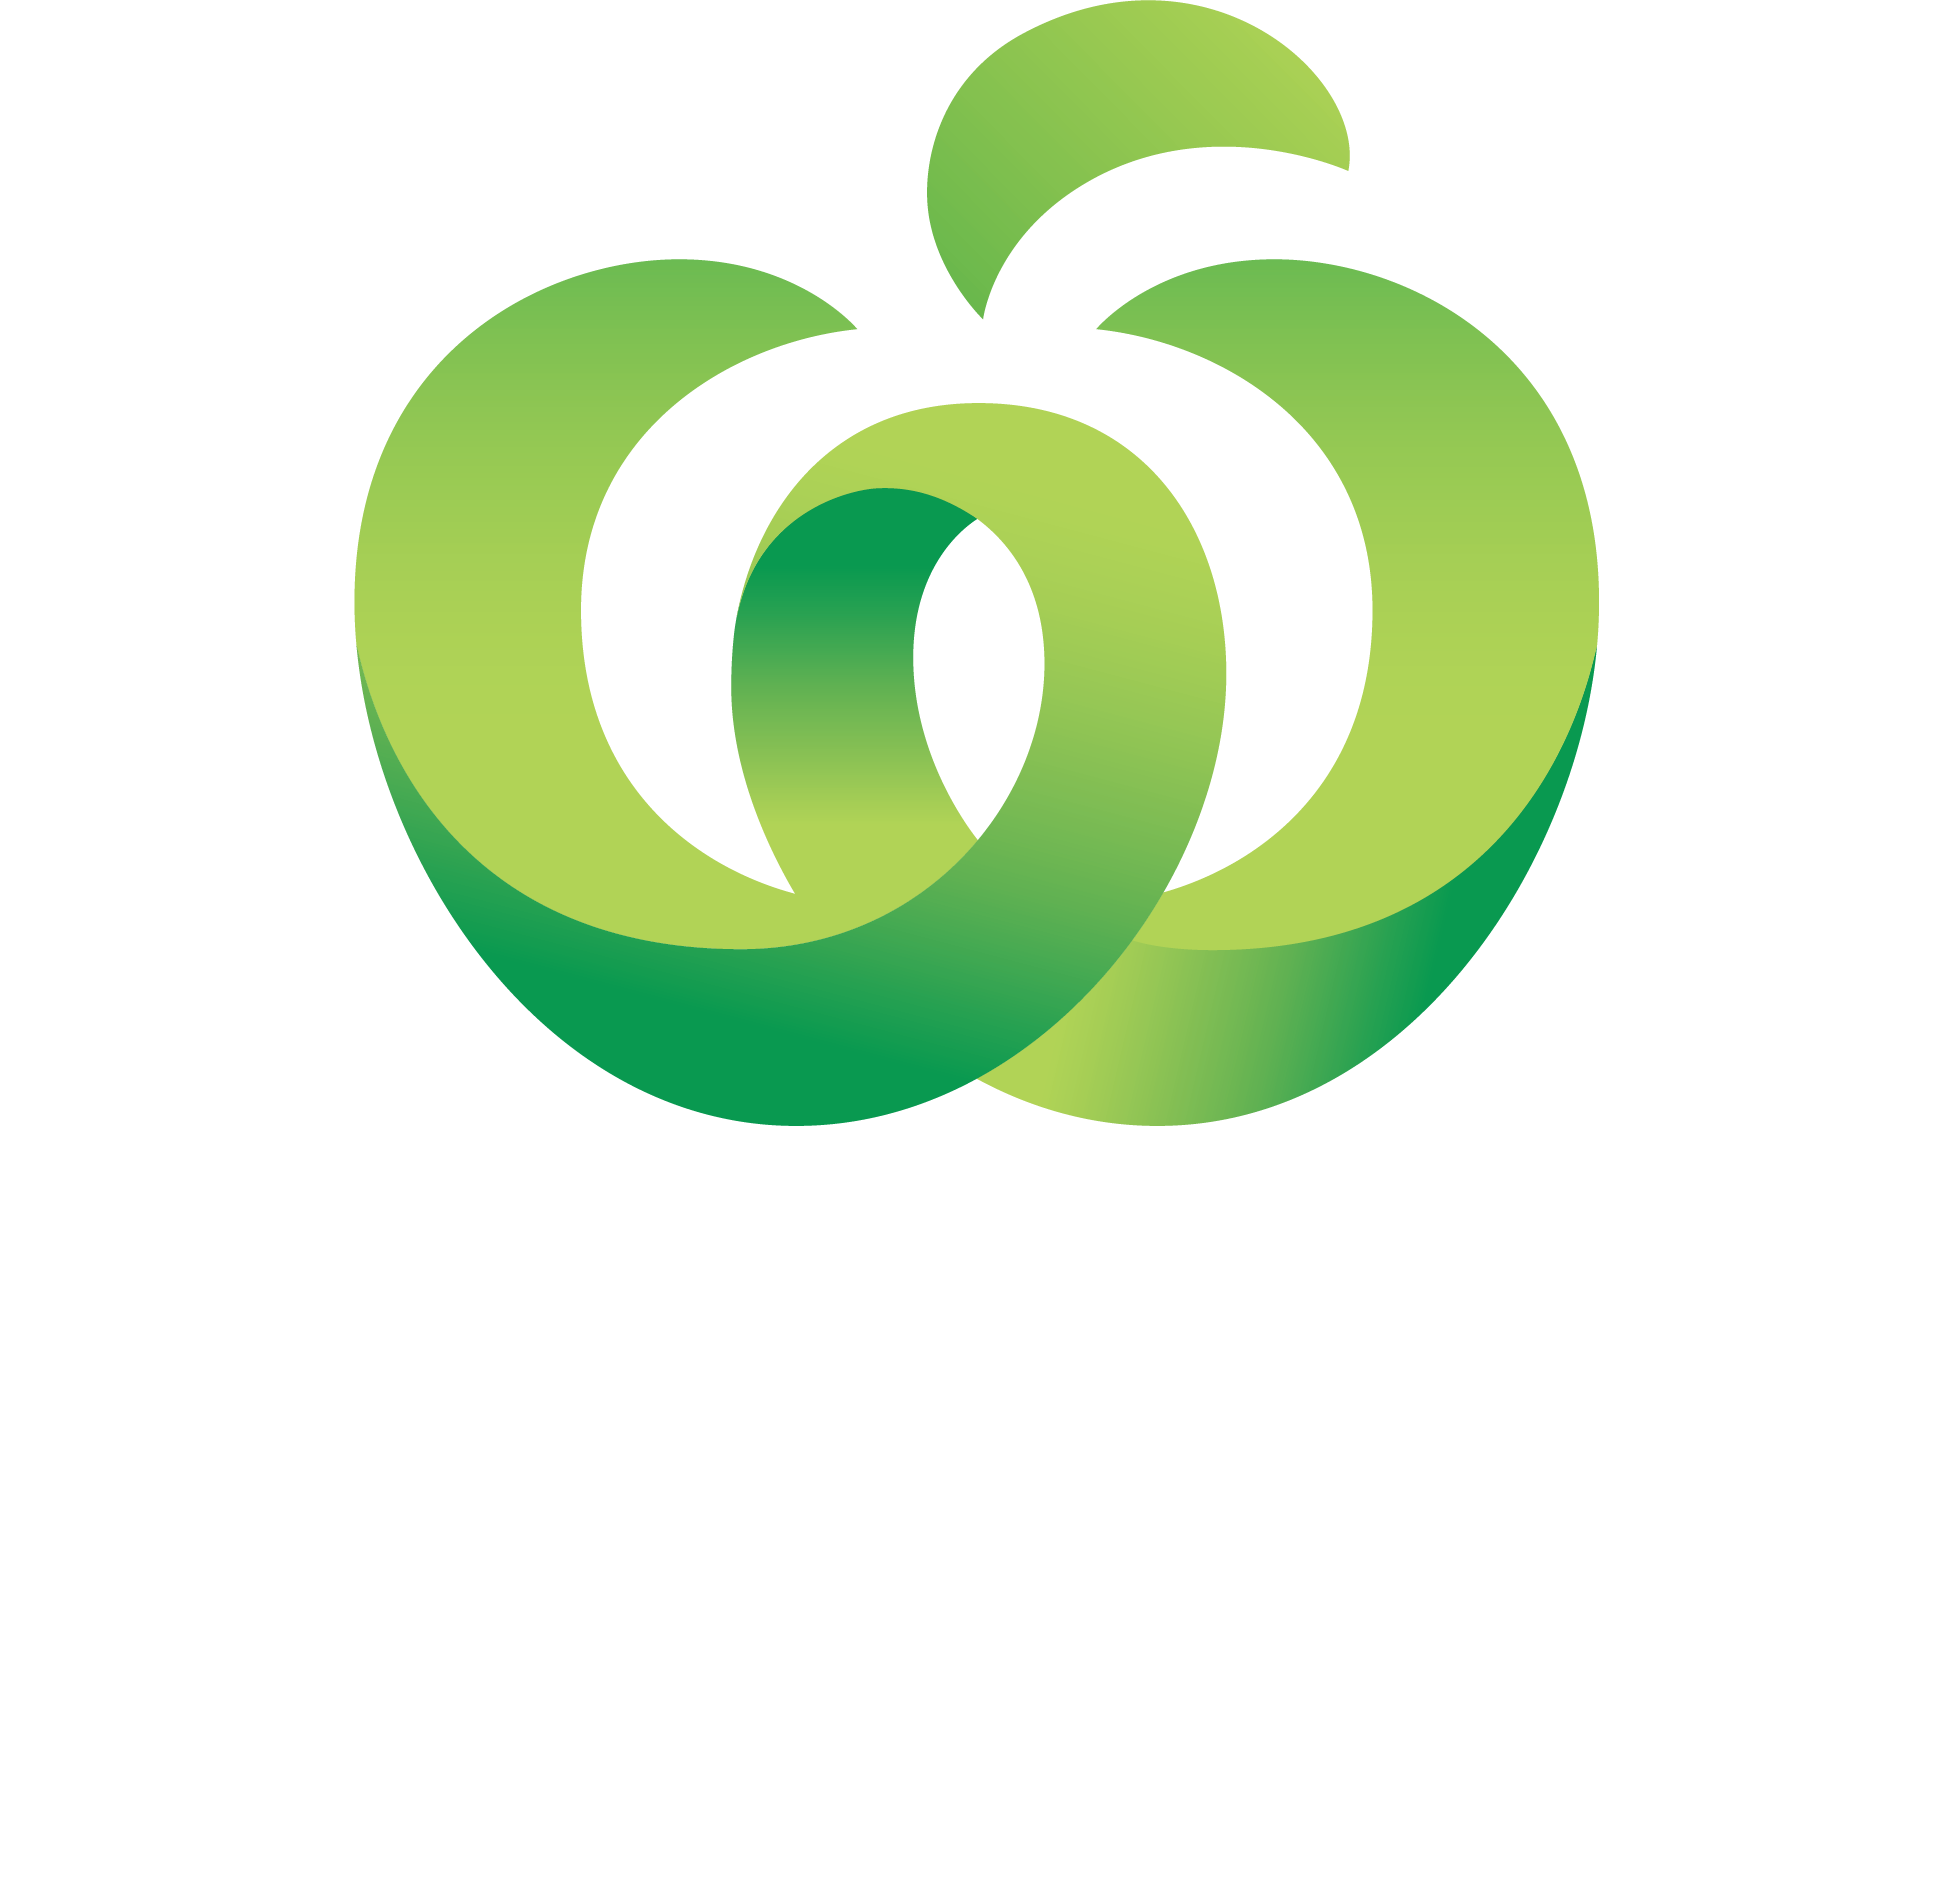 Woolworths, the Fresh Food People